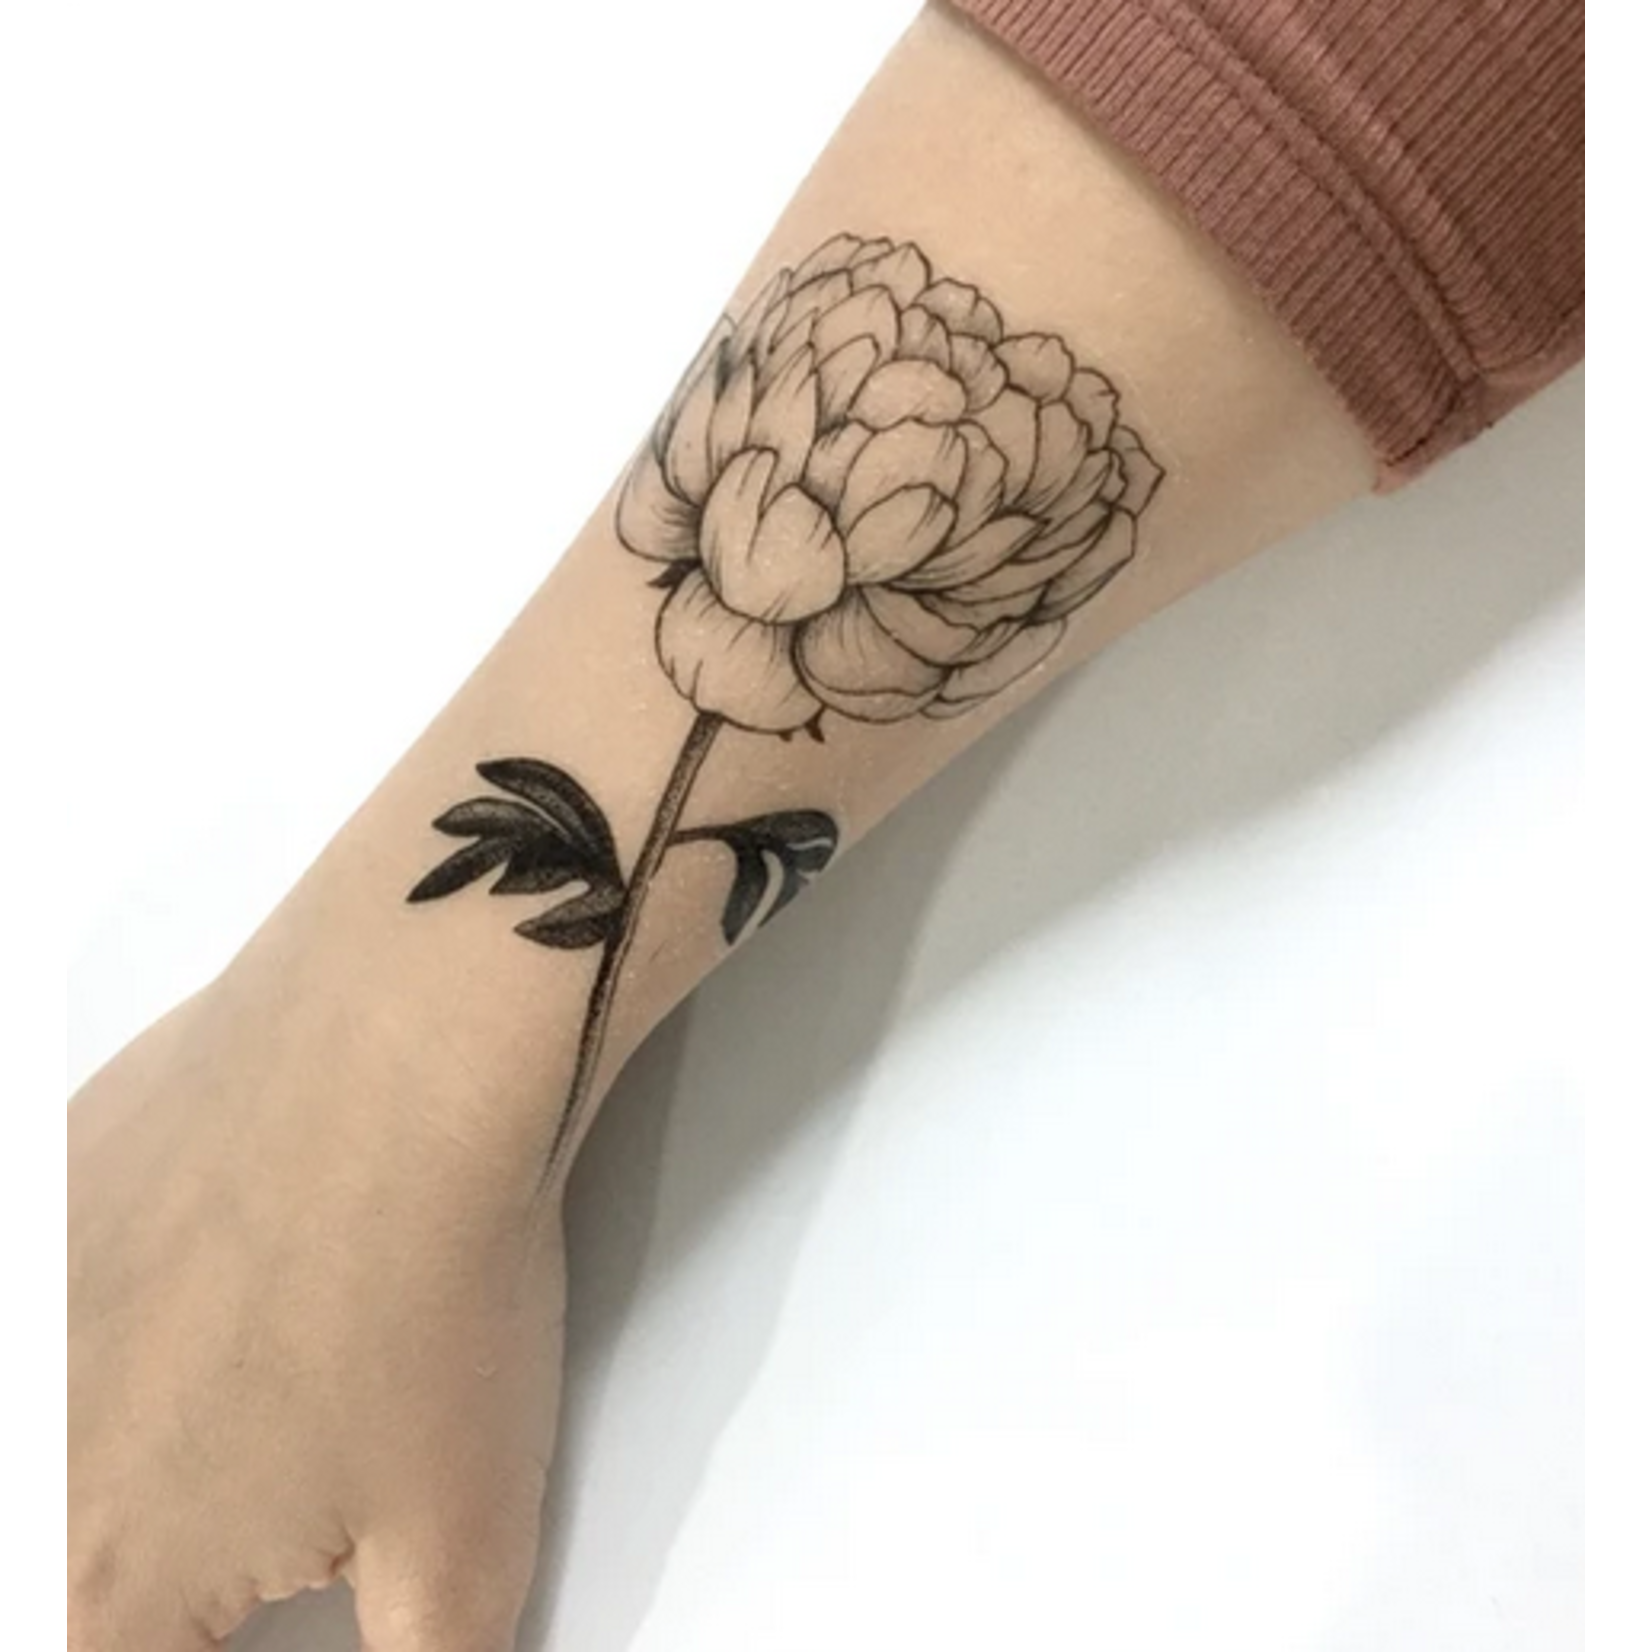 NatureTats Floral + Fauna Temporary Tattoos